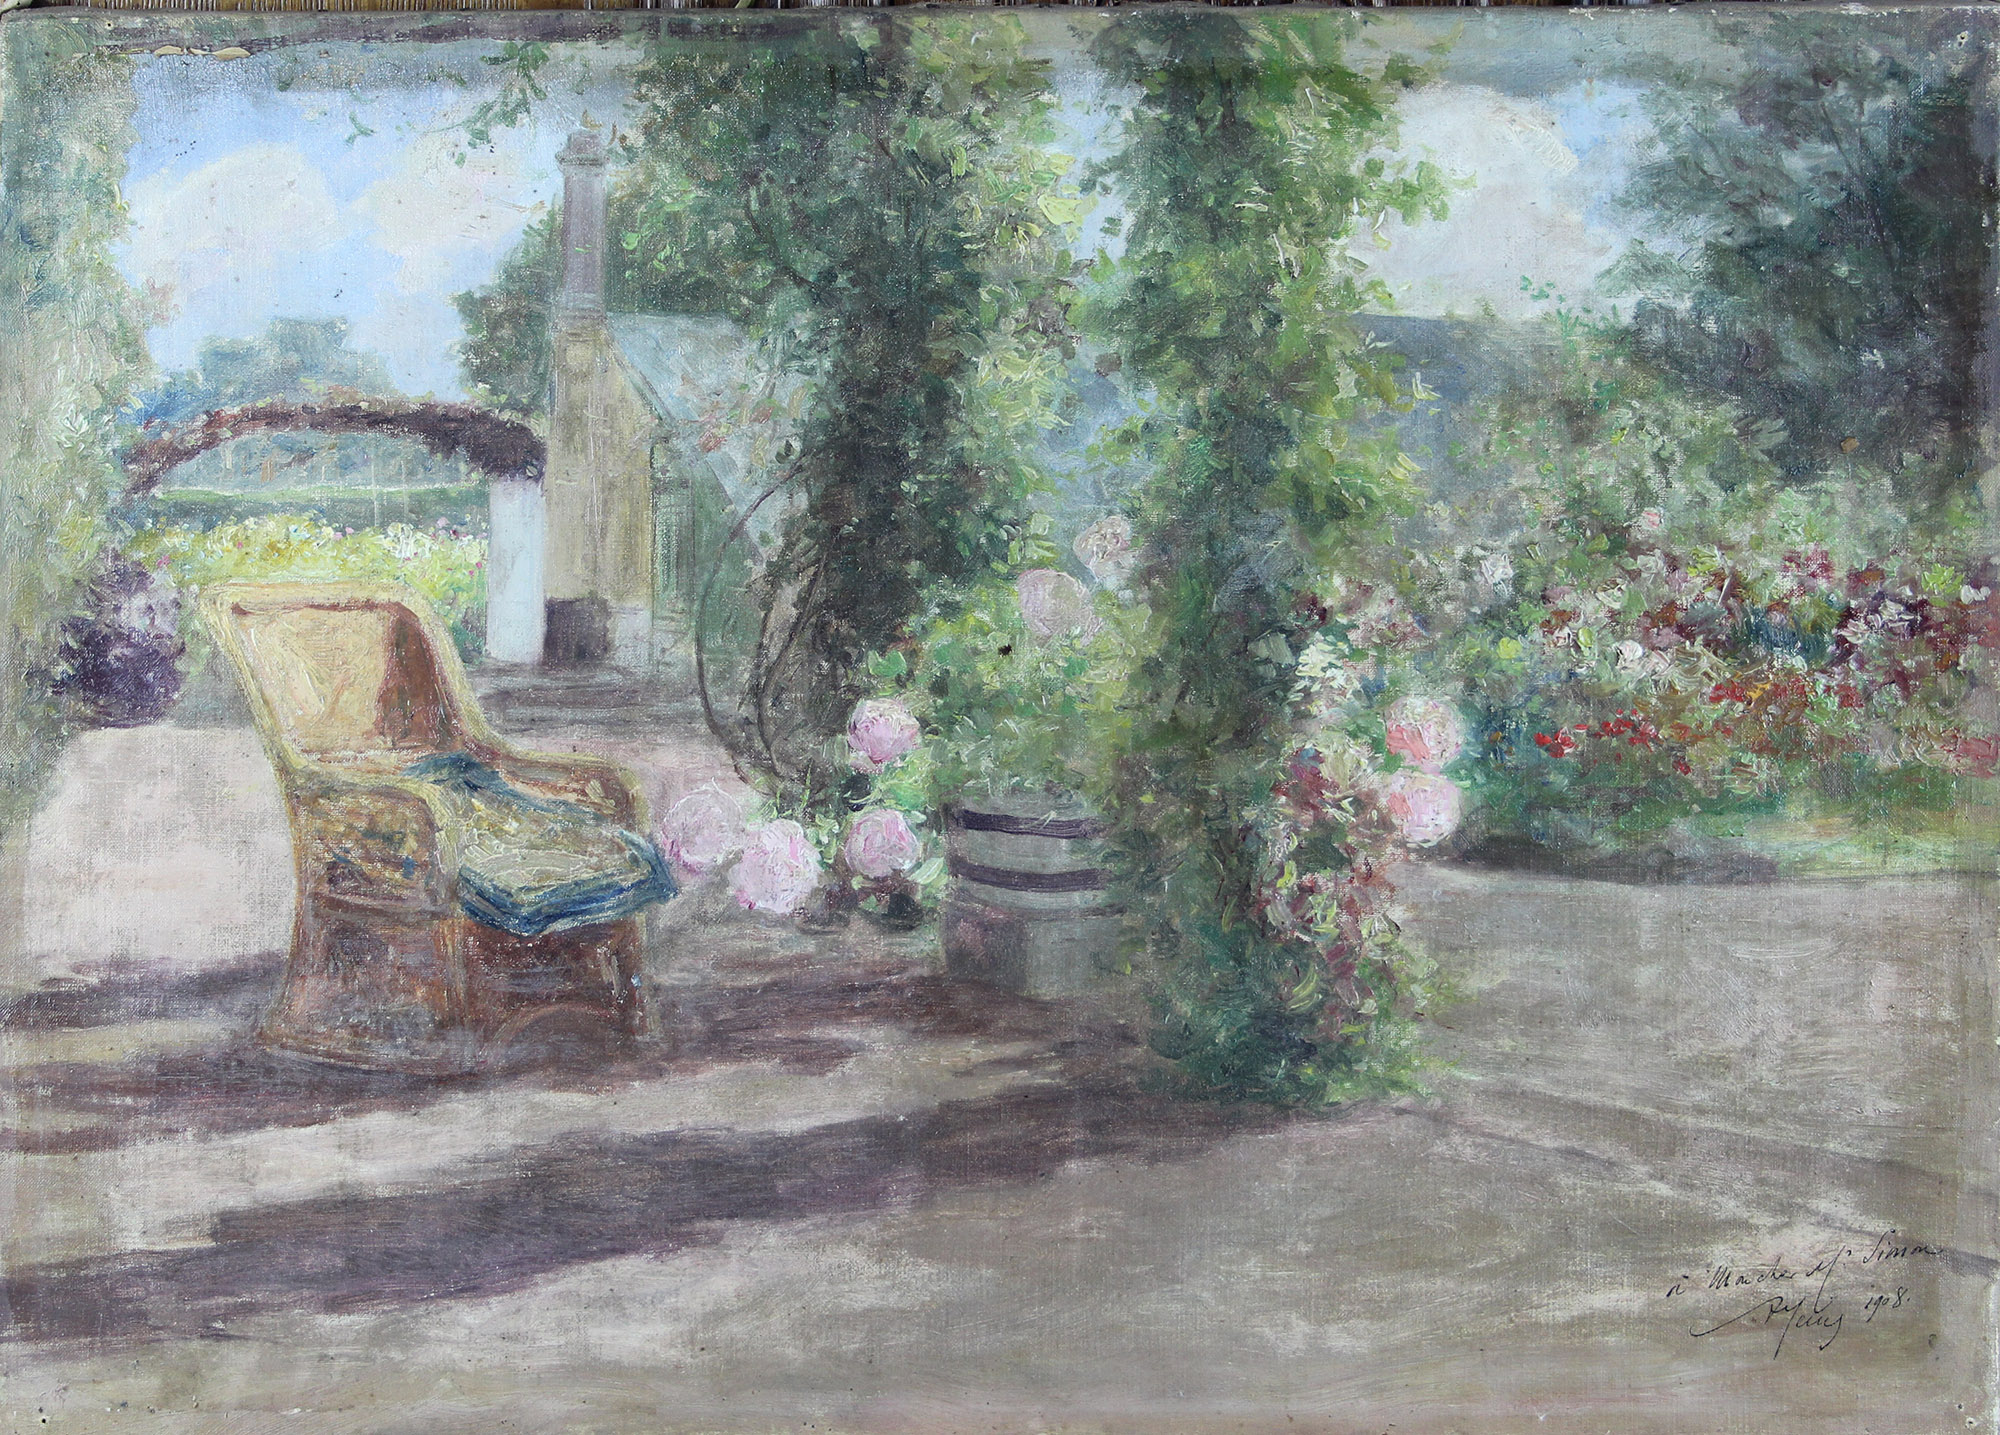 tableau La roseraie Heins  Armand Jan  impressionnisme huile toile 